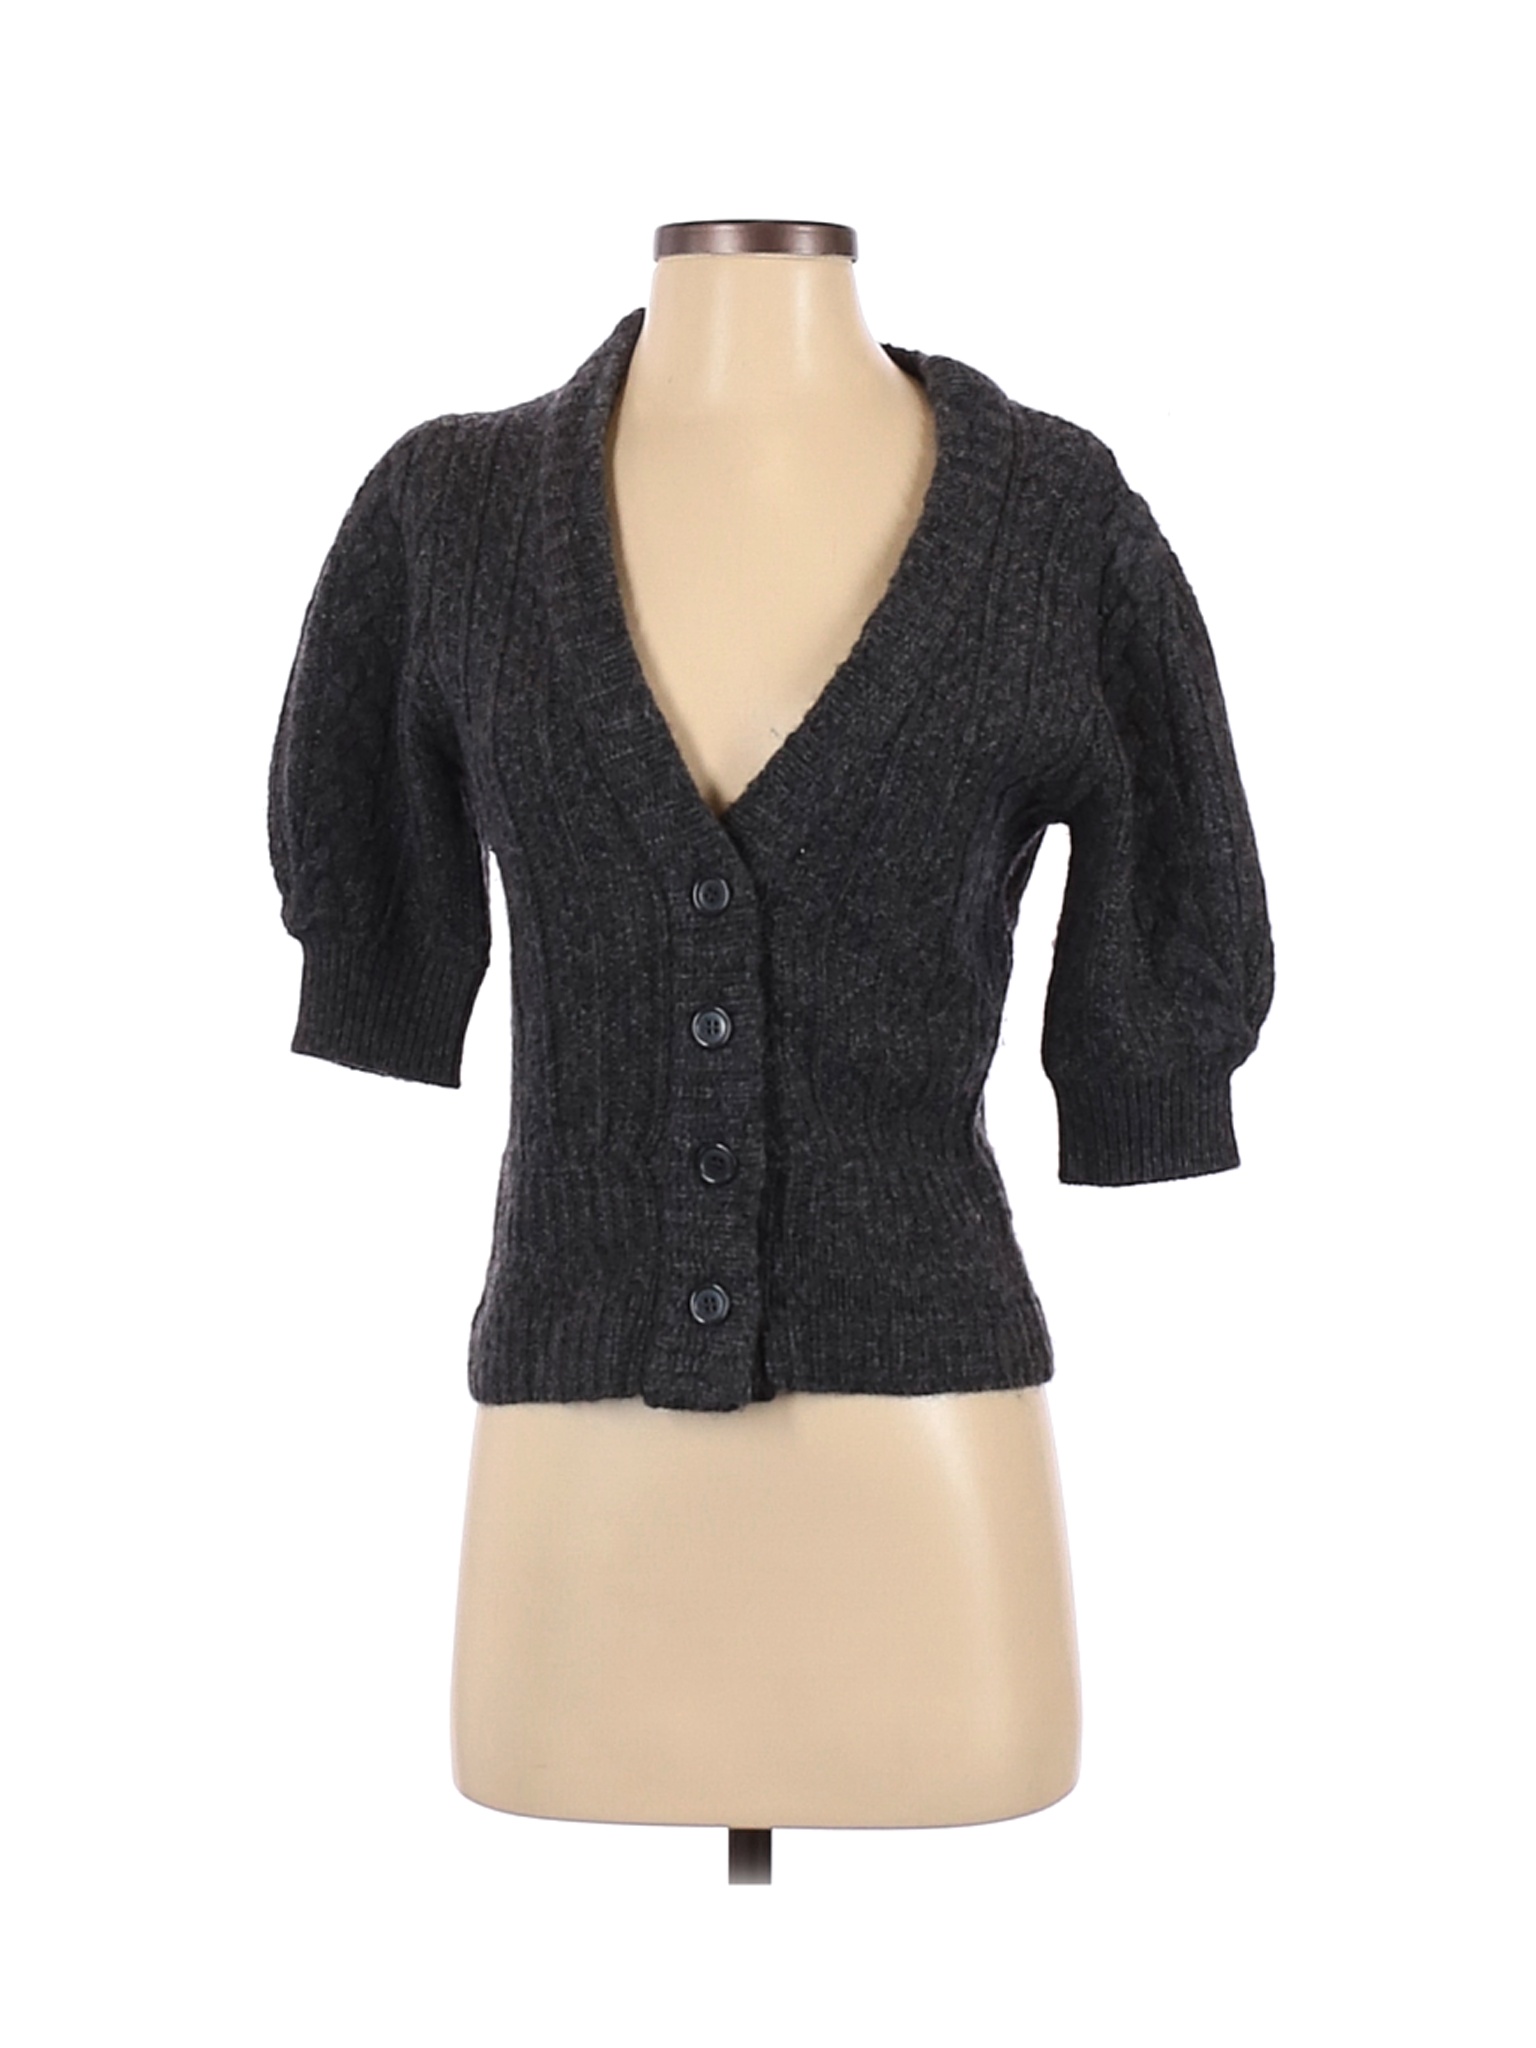 French Connection Women Black Wool Cardigan S | eBay